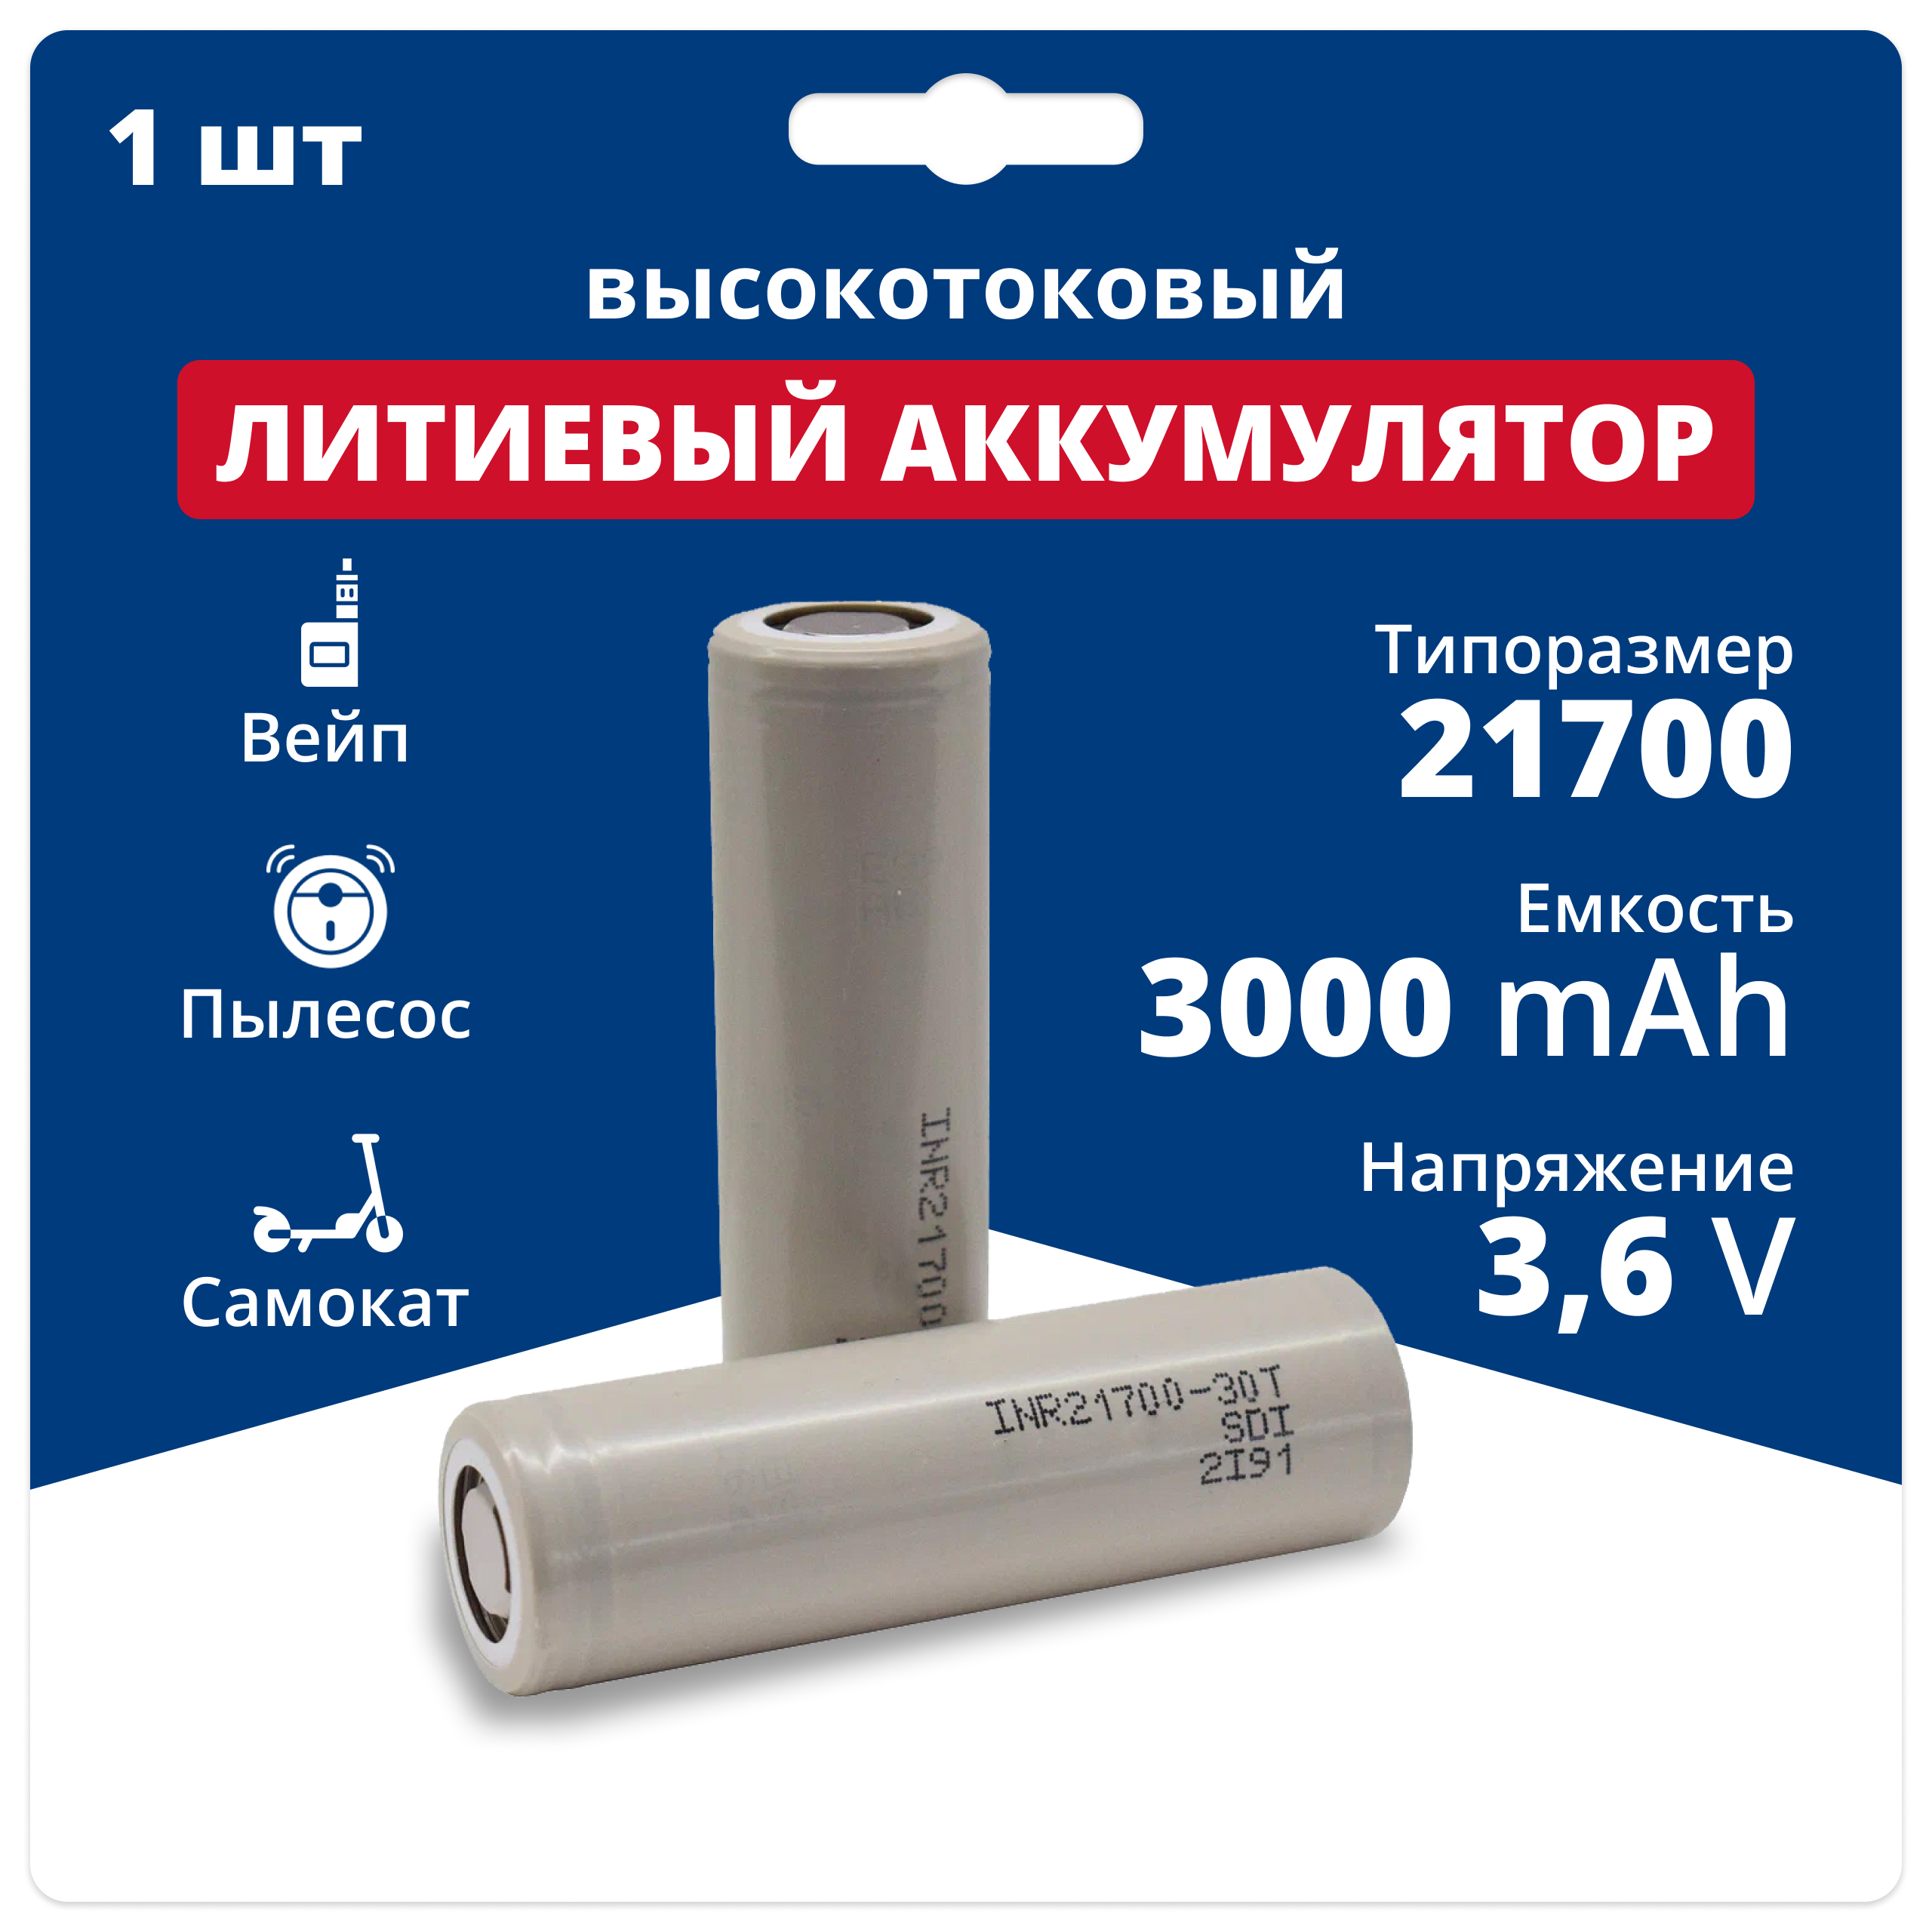 Аккумулятор 21700 Samsung INR21700-30T 3,6 V, 3,0 Ah, 35 А, Li-ion, 1 шт.